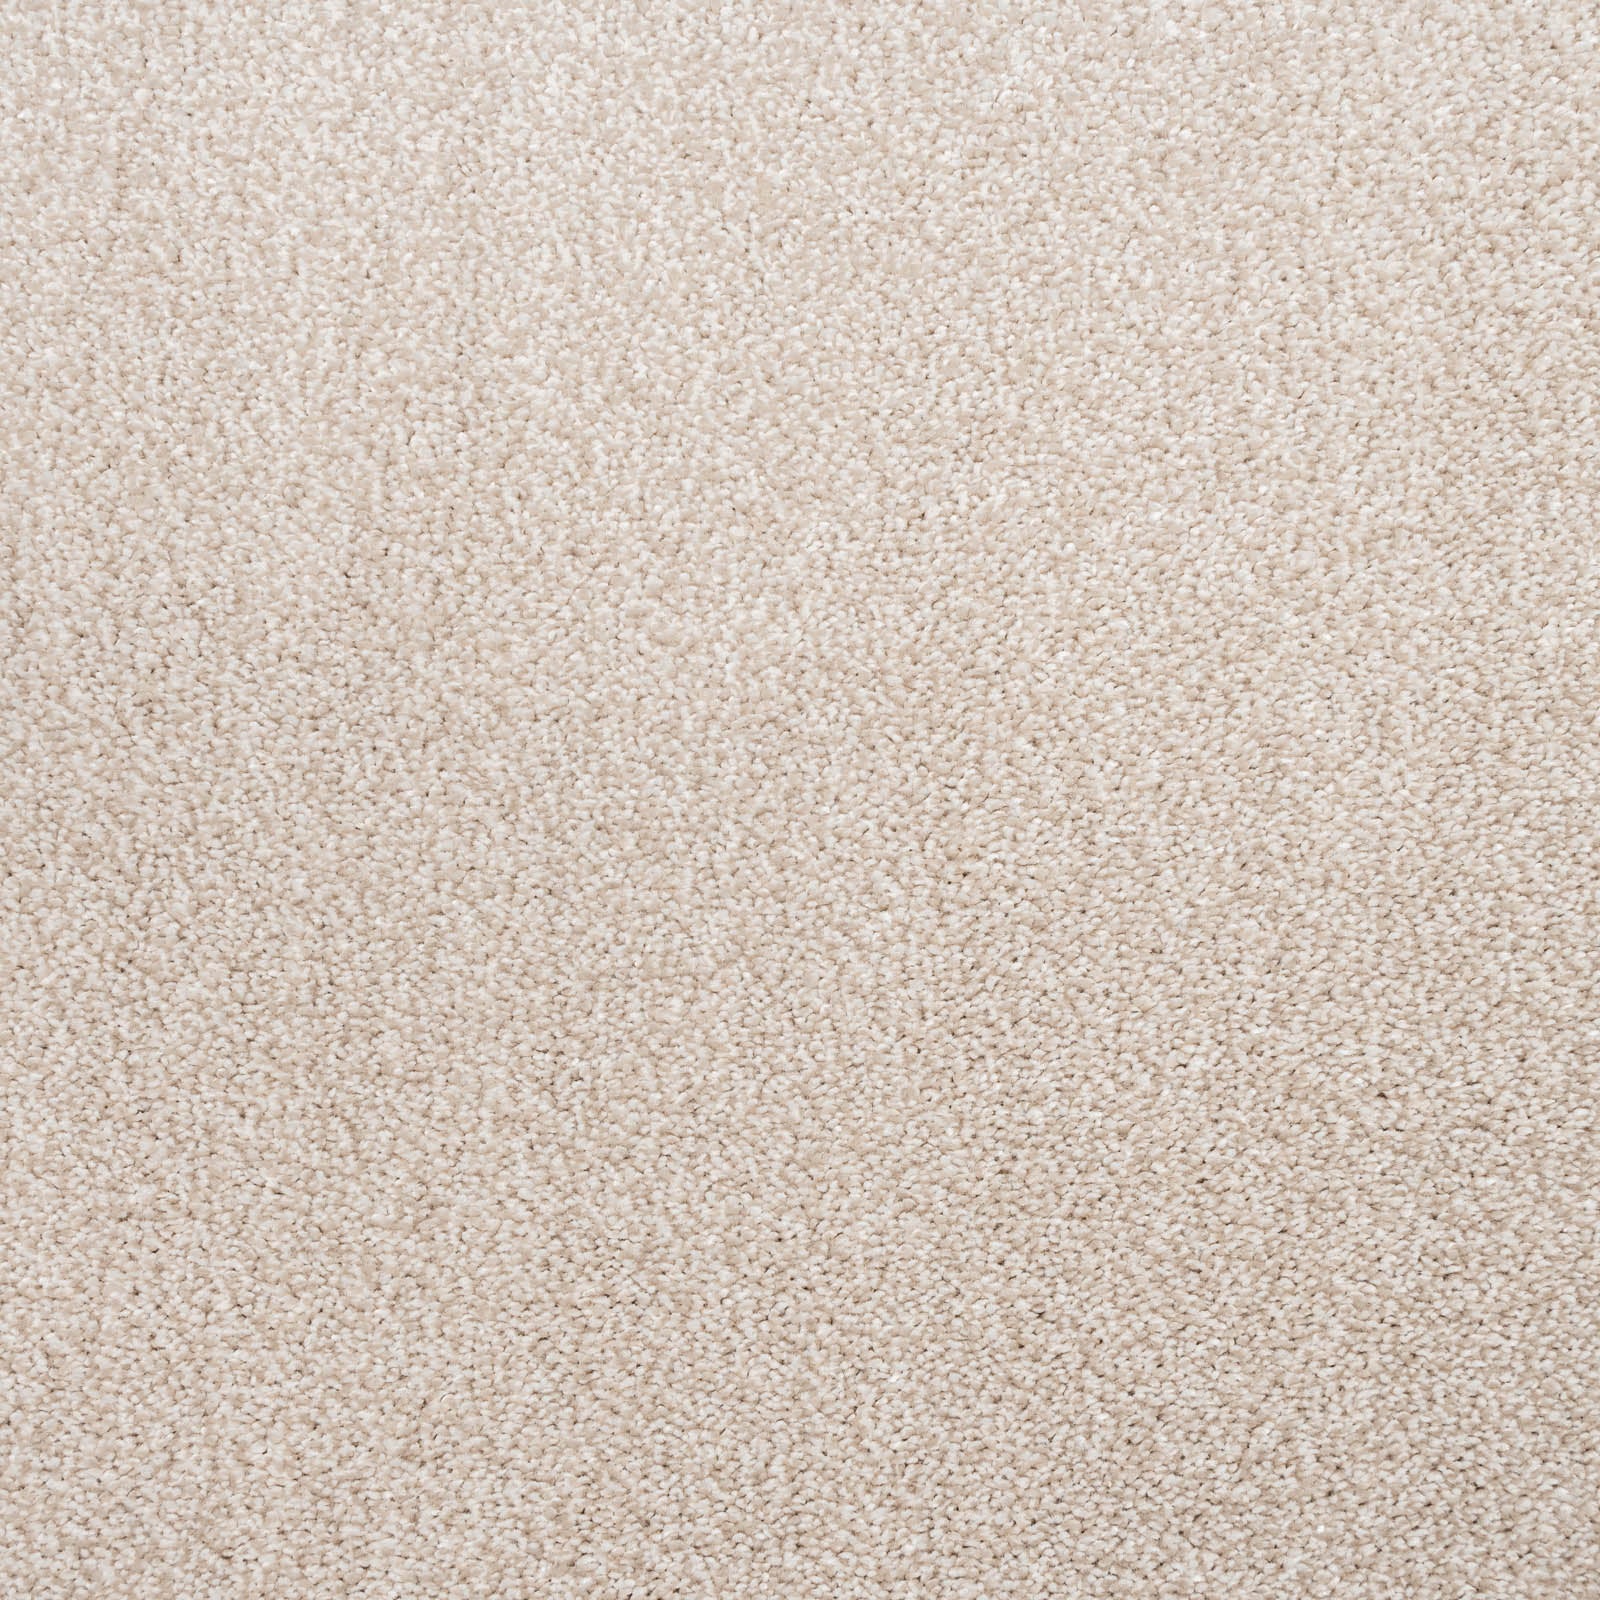 Pale Beige Soft Supreme Felt Back Saxony Carpet